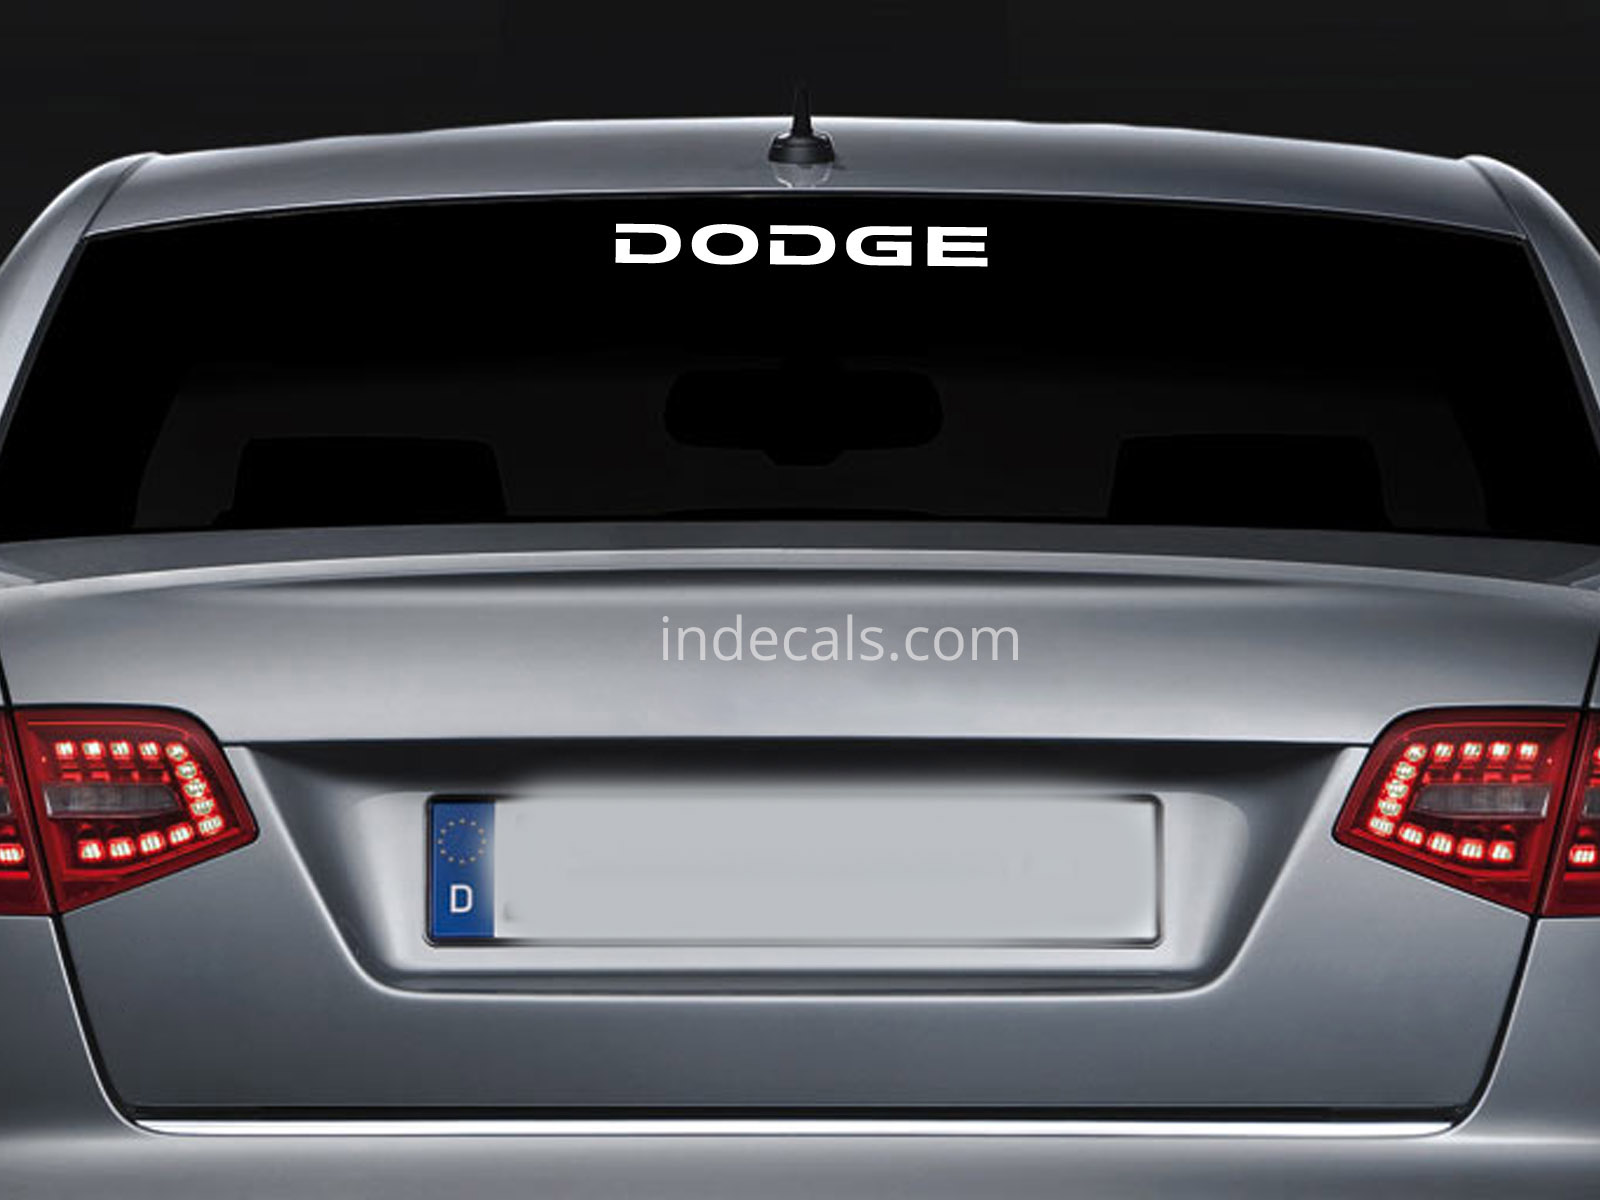 1 x Dodge Sticker for Windshield or Back Window - White